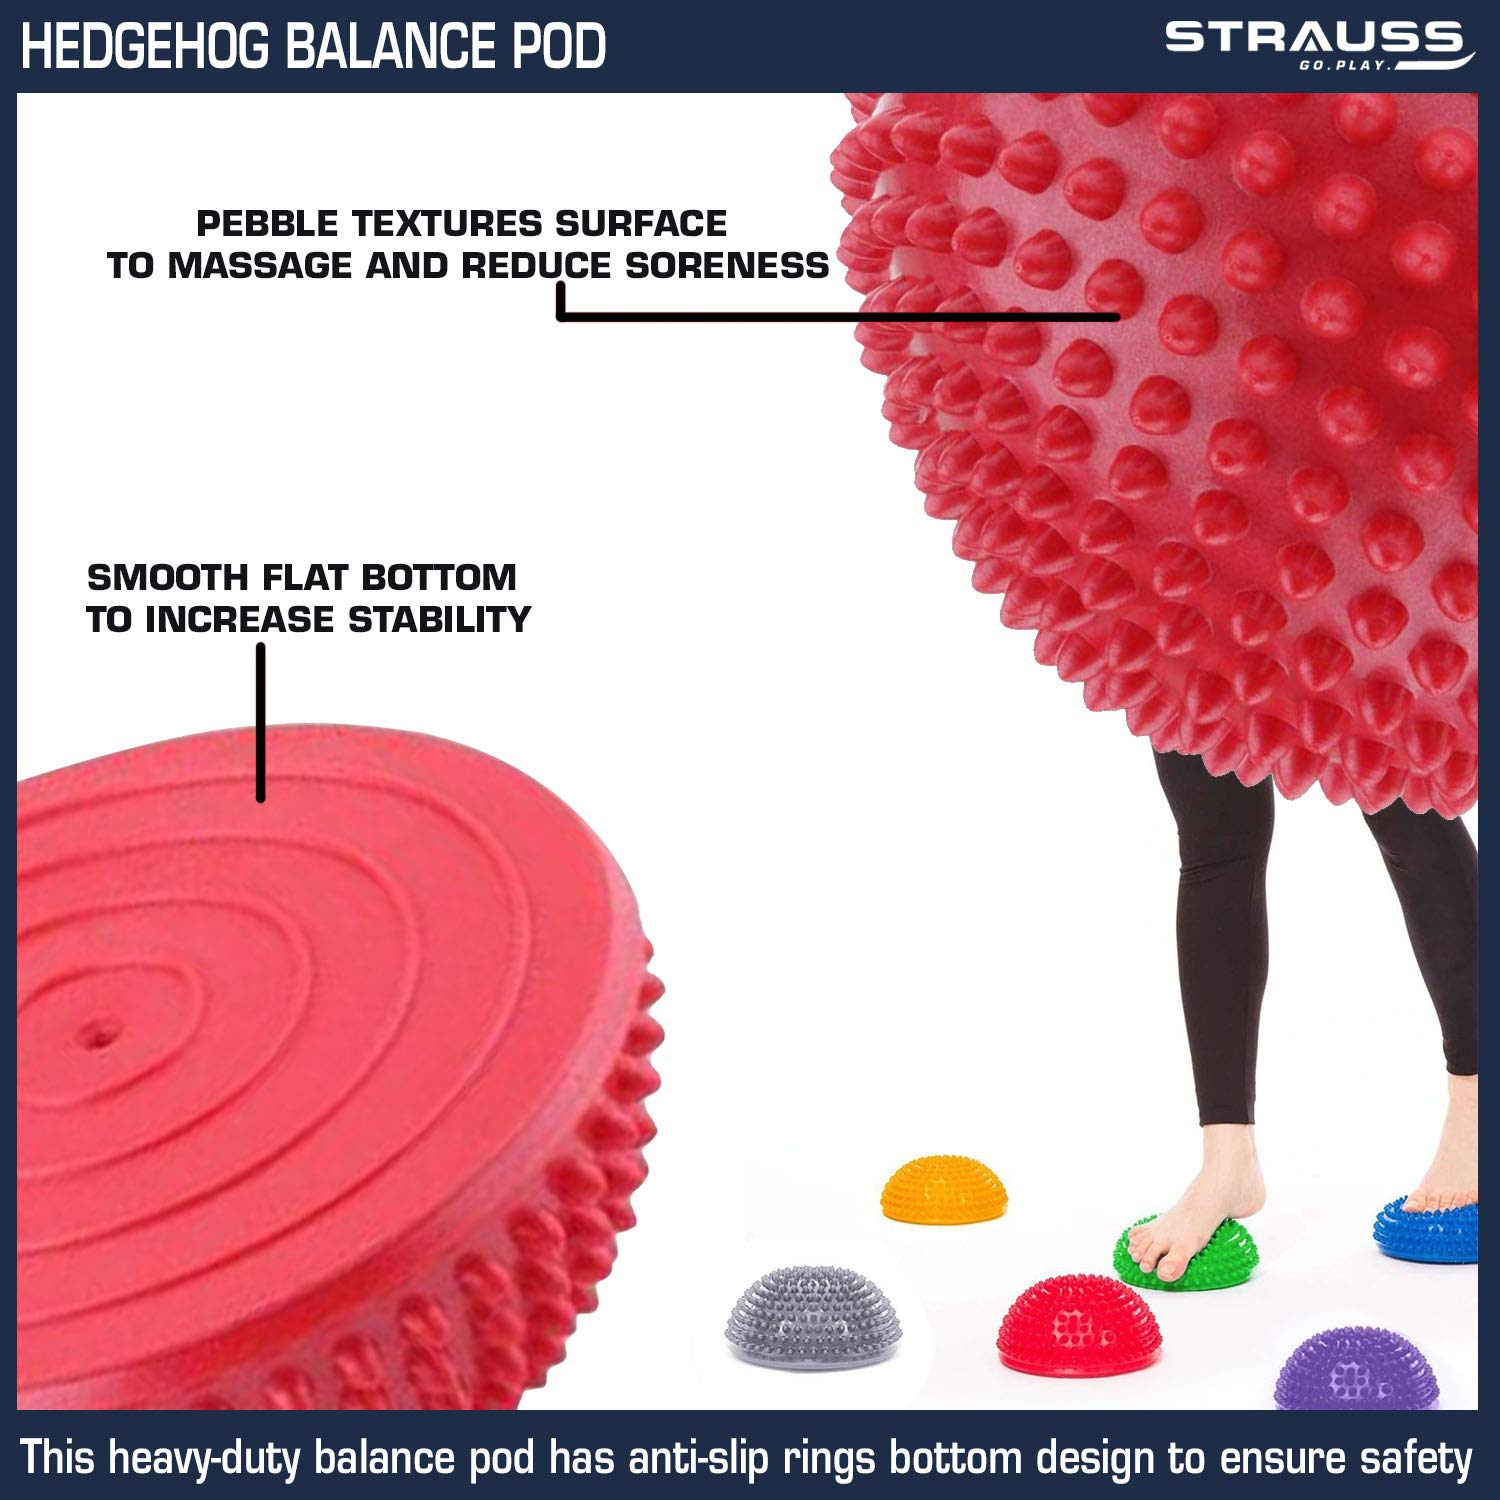 Strauss Hedgehog Balance Pod, (Red)